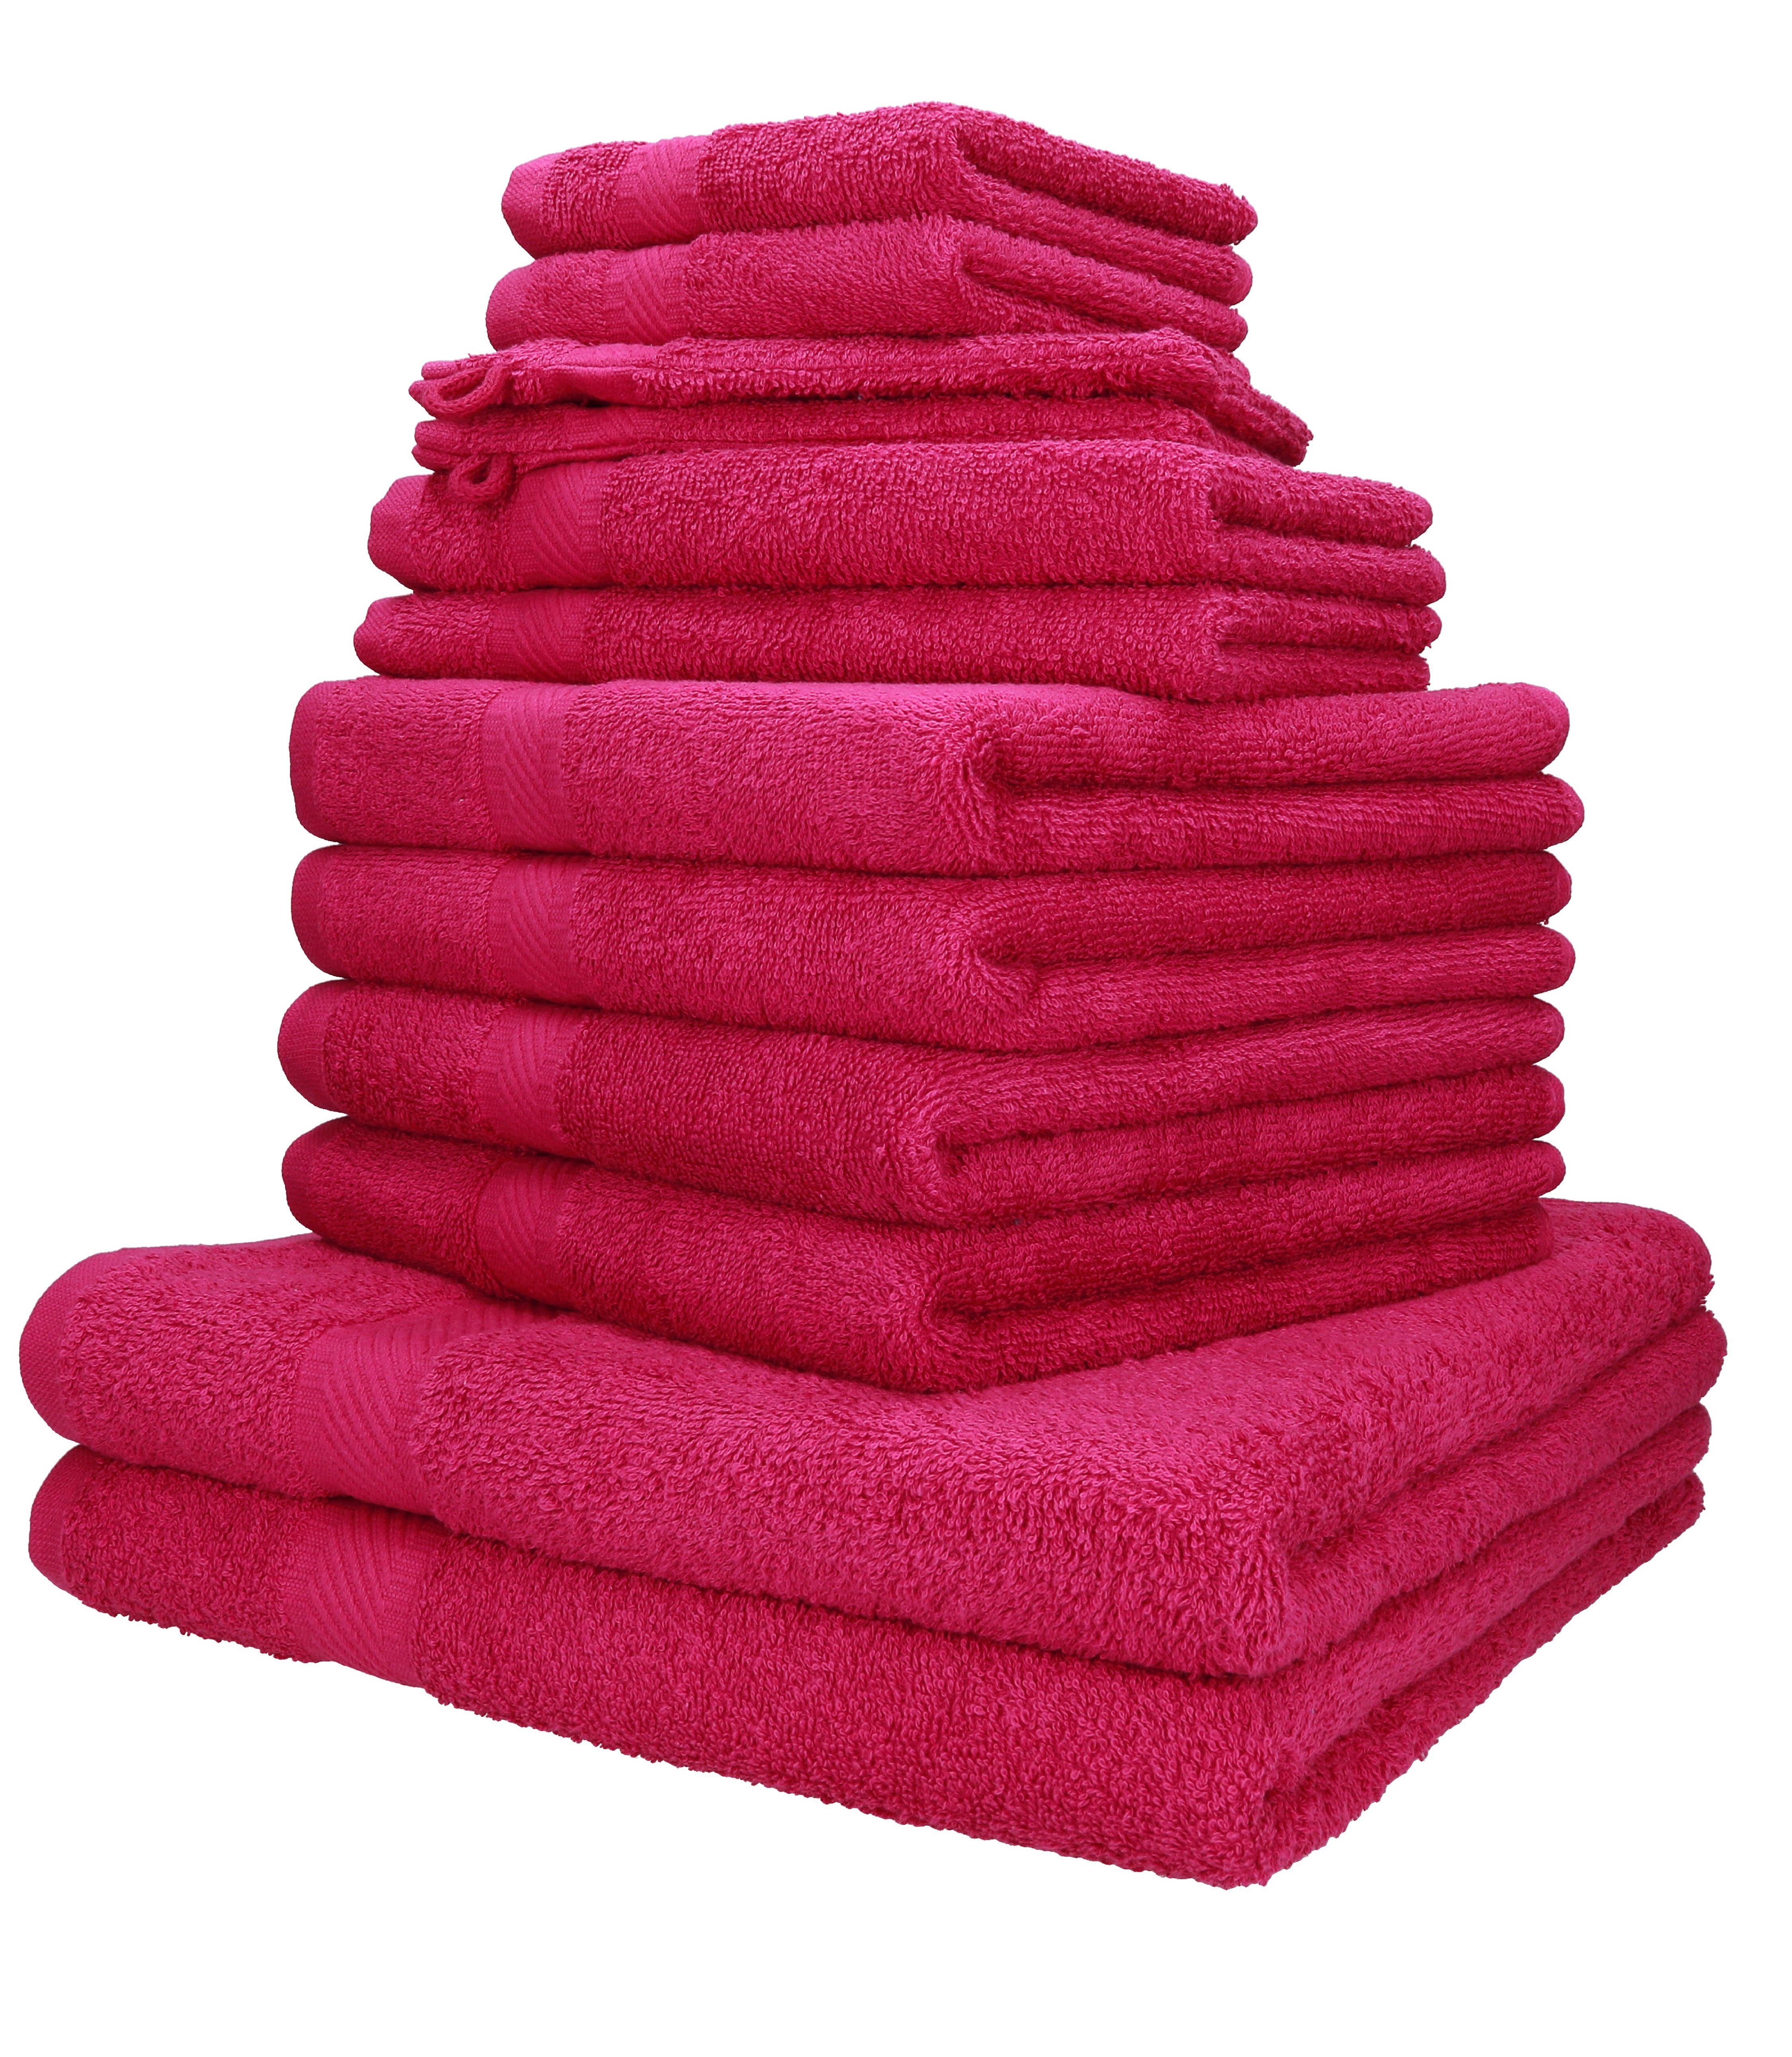 Betz Handtuch Set 12-TLG. Handtuch-Set Palermo 100% Baumwolle 2 Liegetücher 4 Handtücher 2 Gästetücher 2 Seiftücher 2 Waschhandschuhe, 100% Baumwolle, (12-tlg) cranberry | Handtuch-Sets